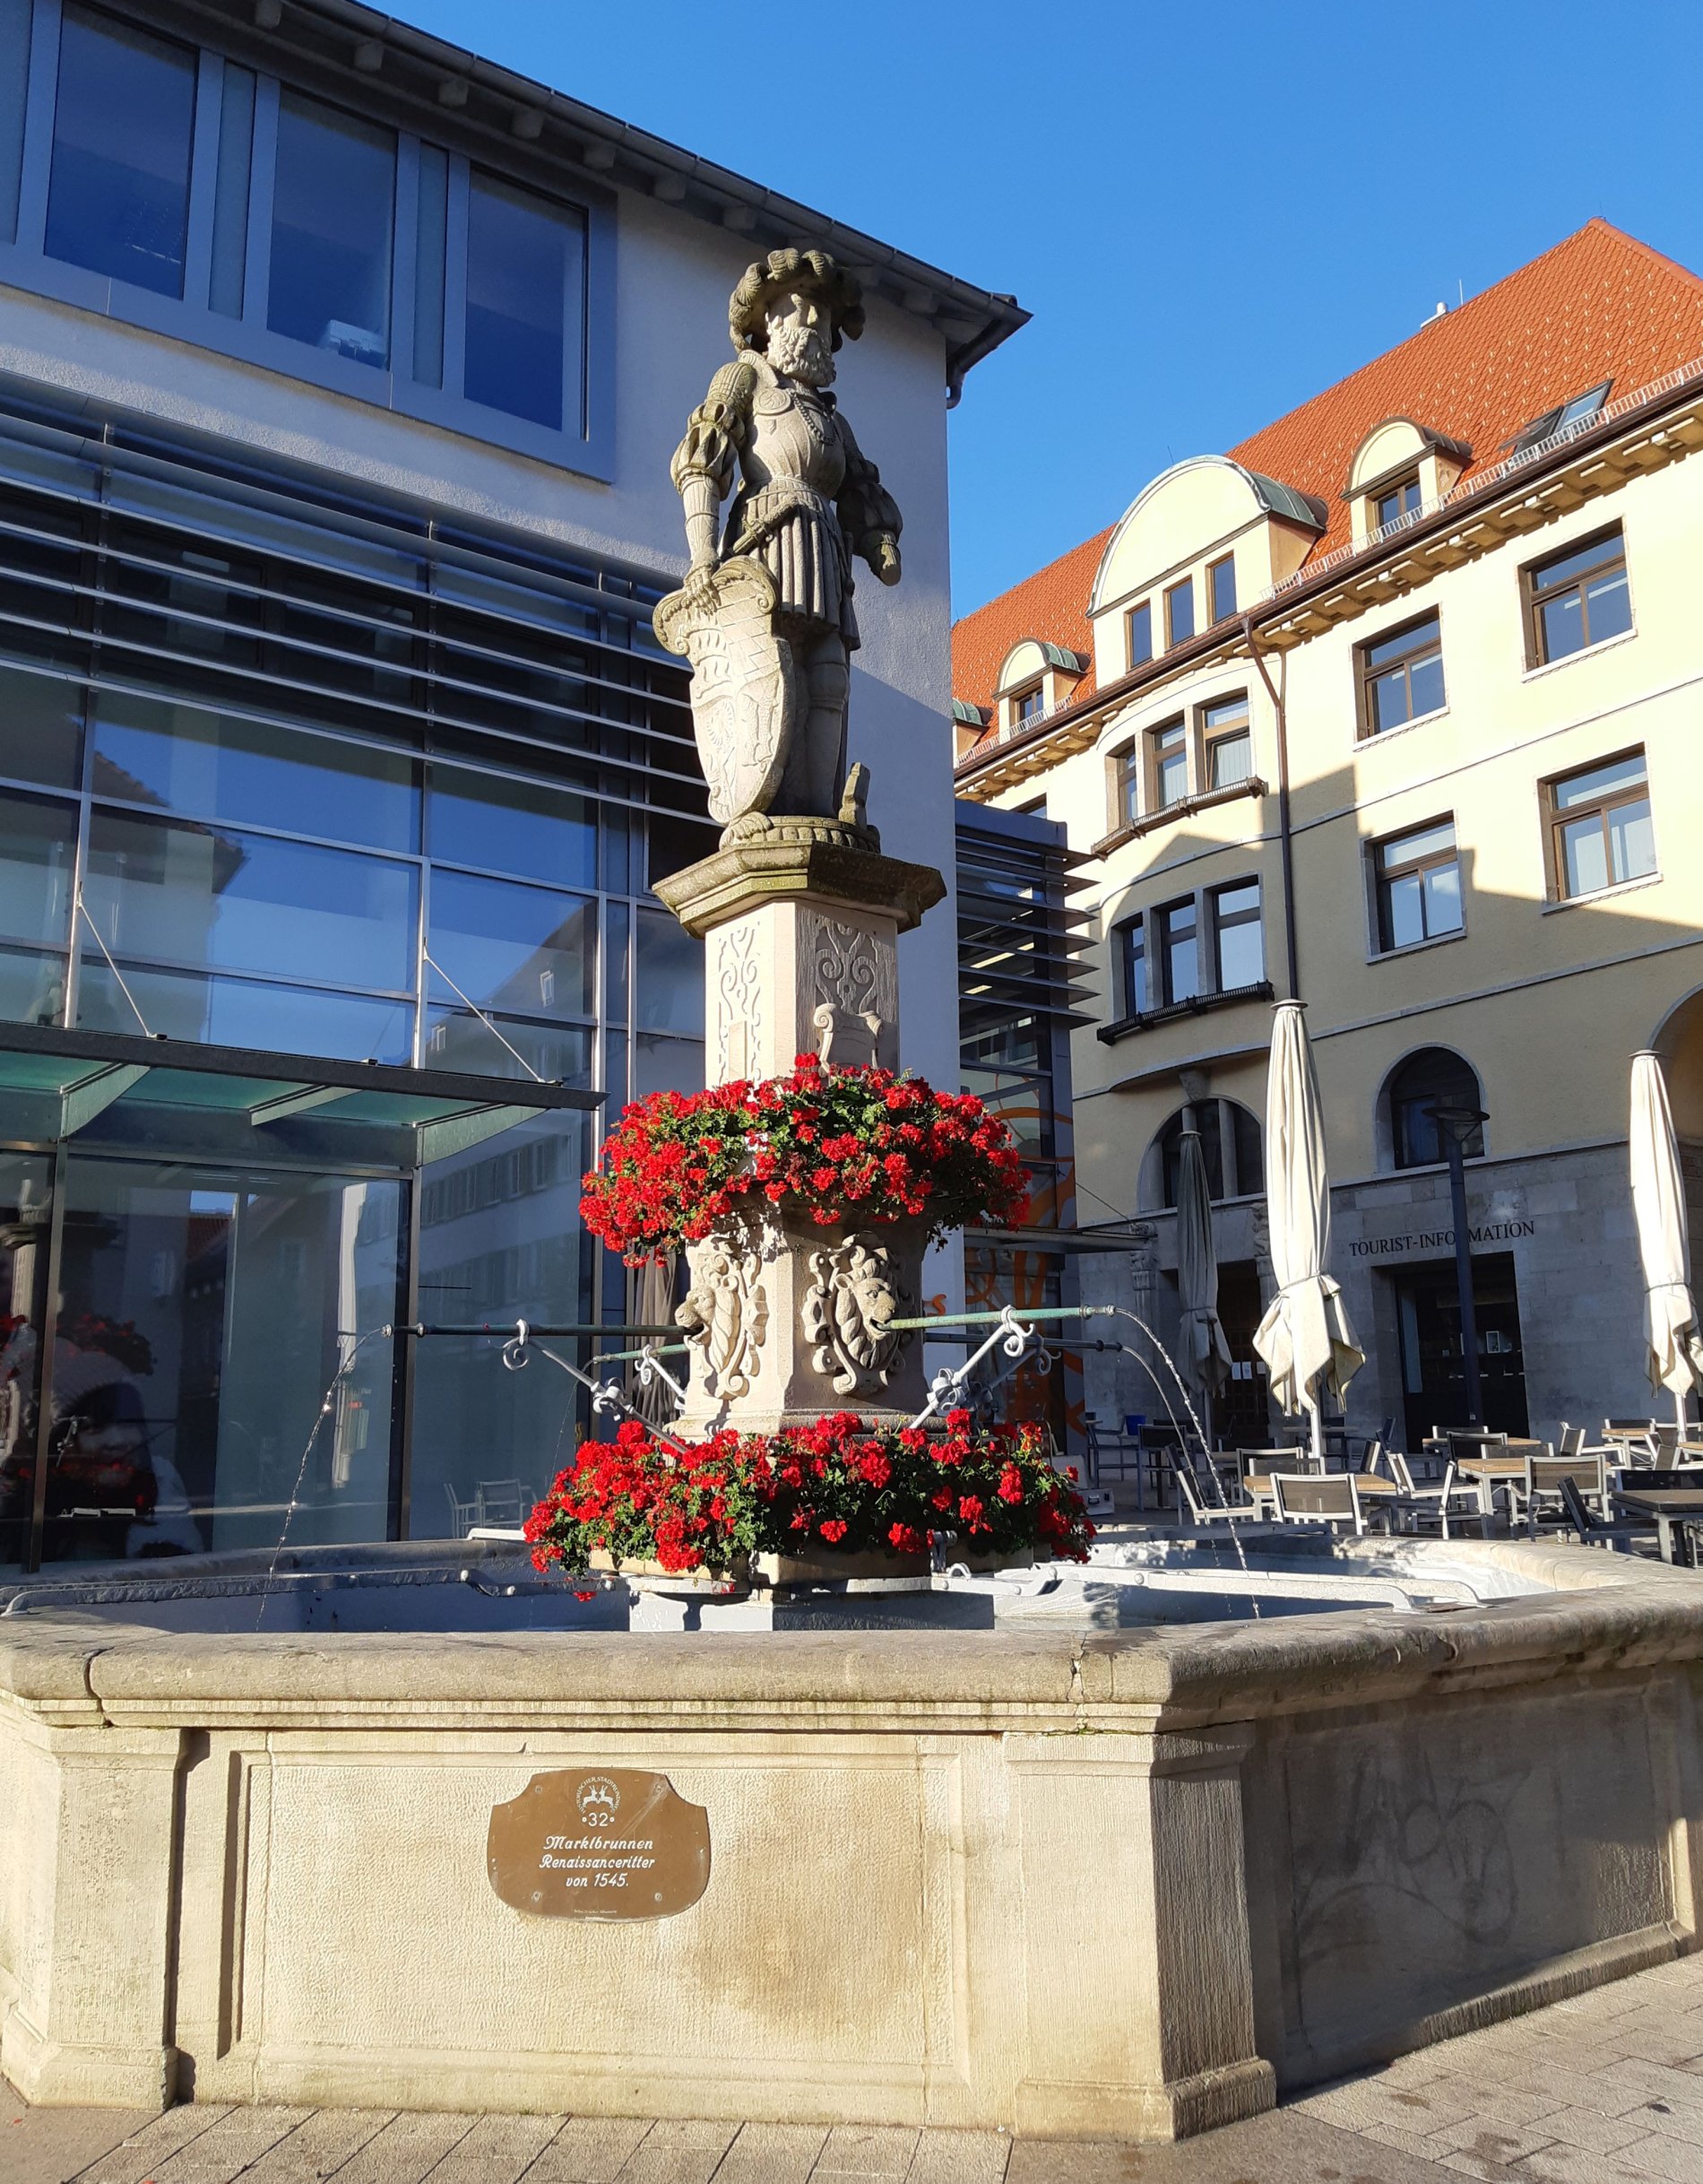 Marktbrunnen in der Marktstraße heute